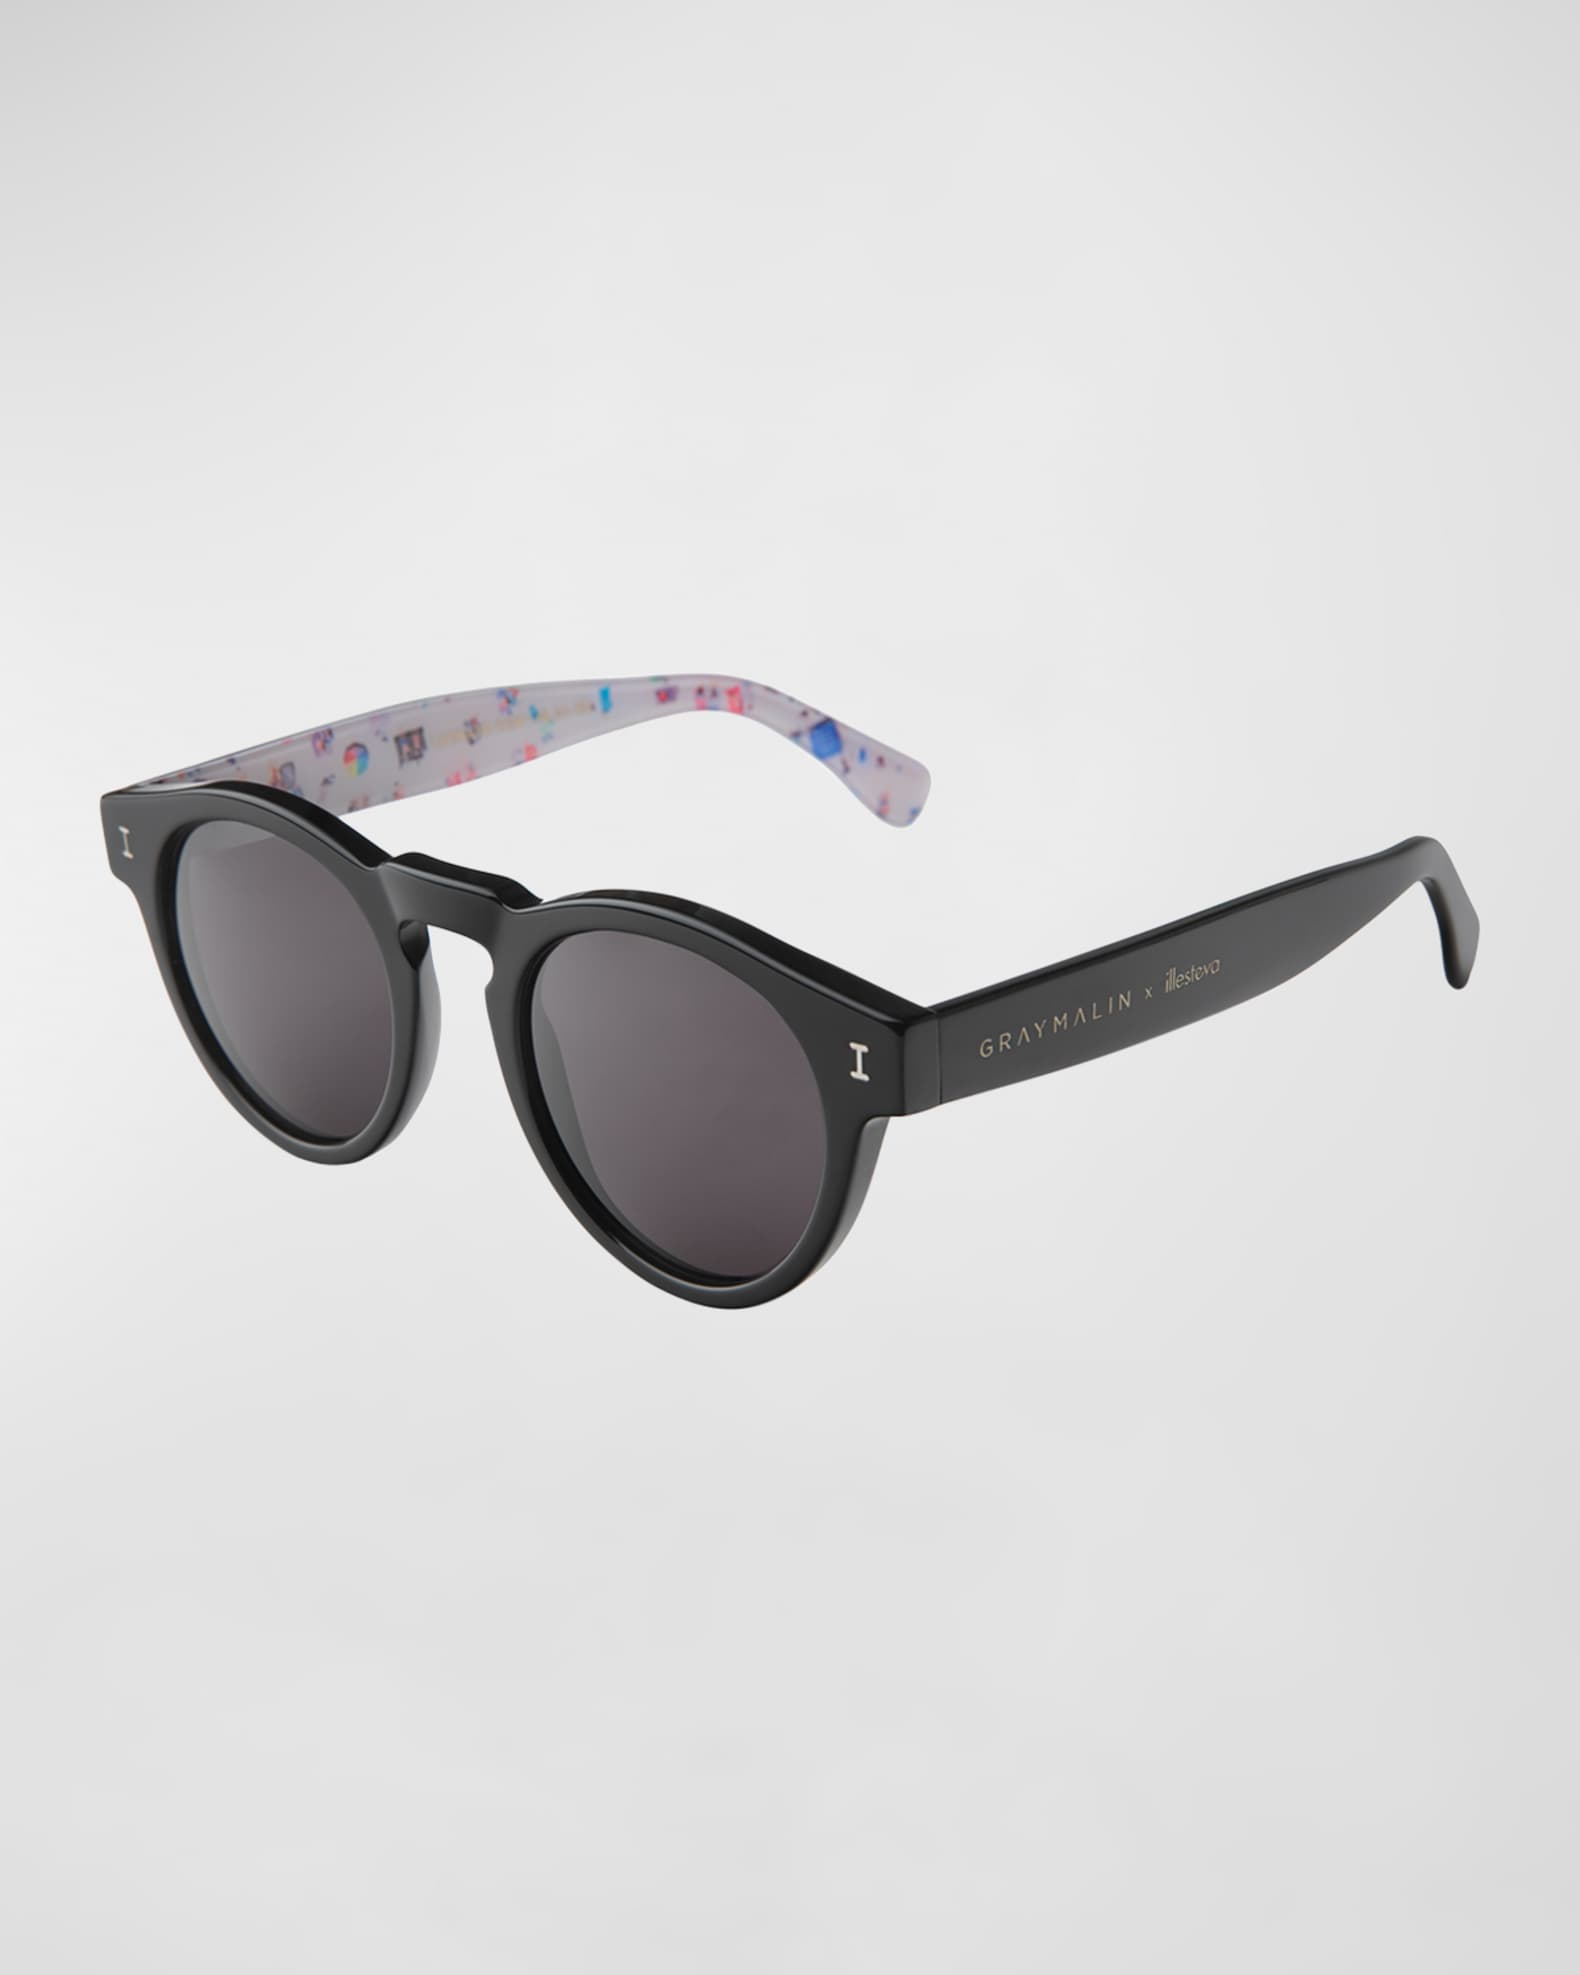 Louis Vuitton Flower Edge Round Sunglasses Light Tortoisehell Plastic. Size E